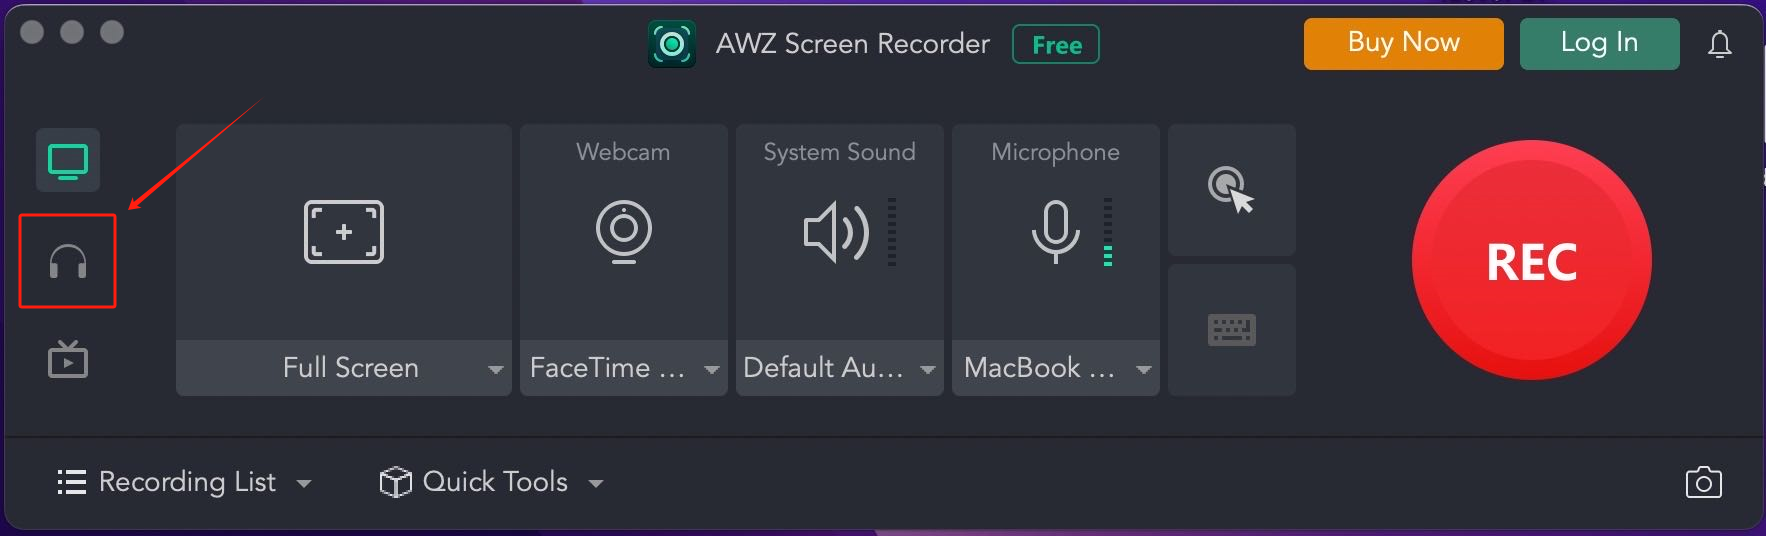 Record Audio on Mac with AWZ Screen Recorder